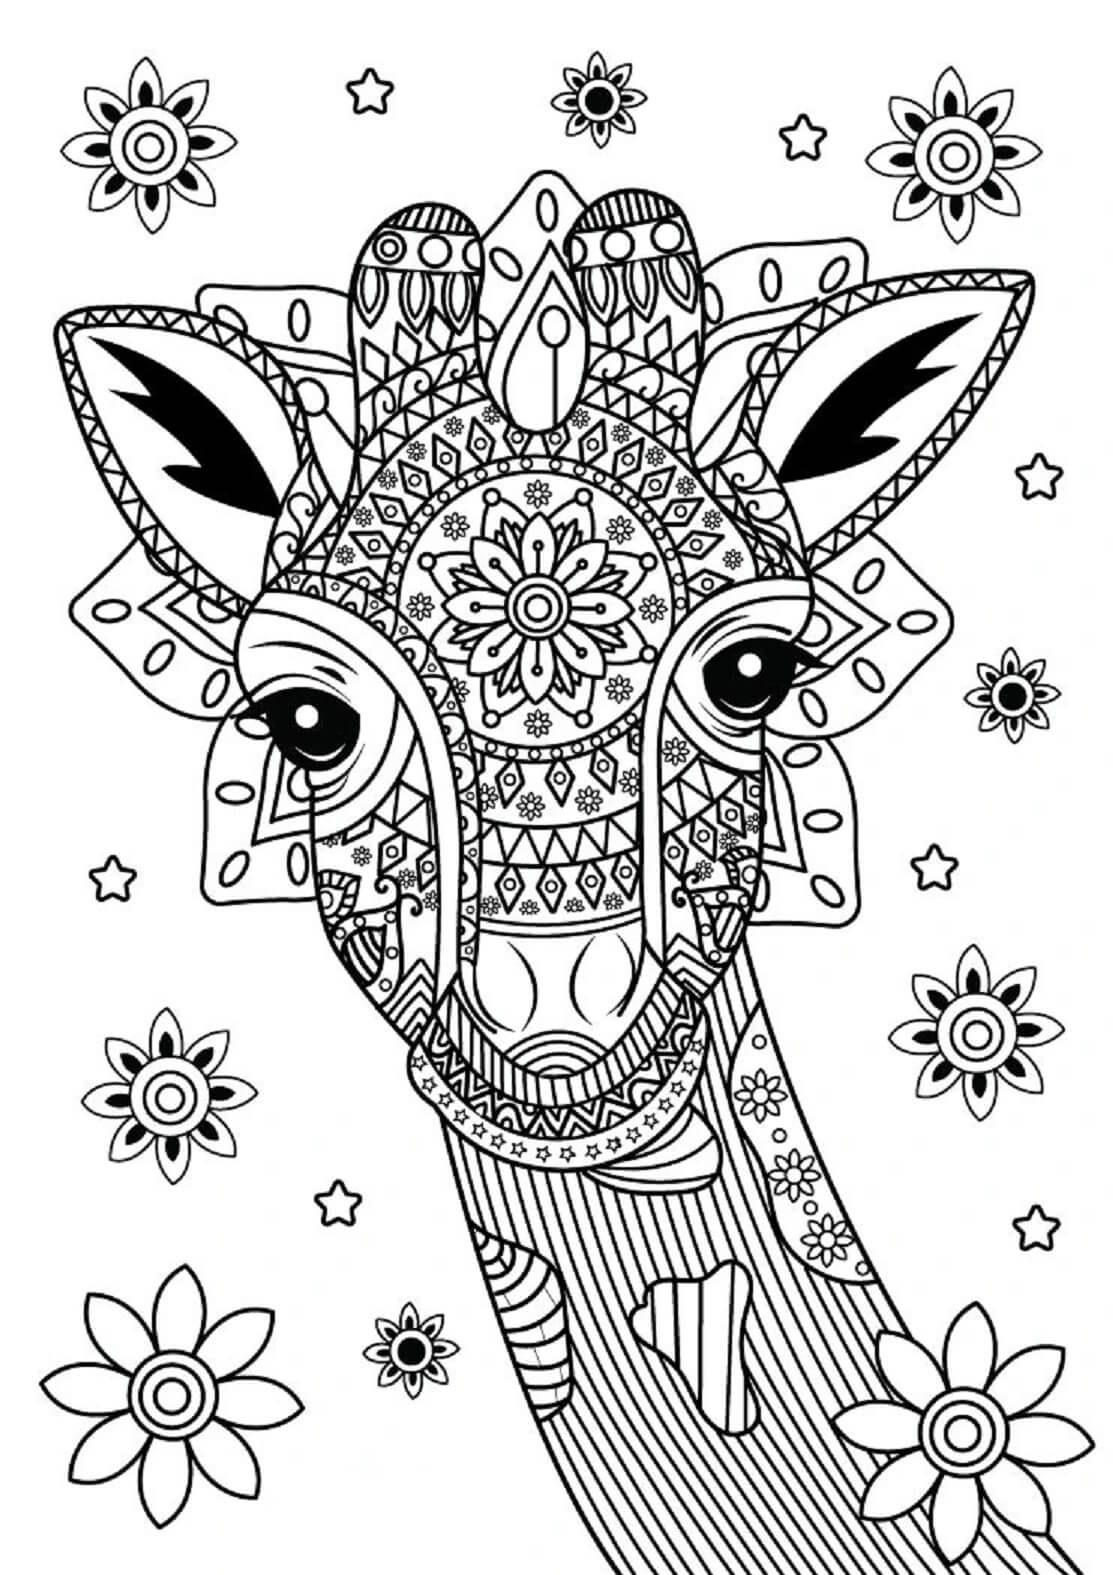 Mandala Giraffe Head With Flowers Coloring Page Mandalas